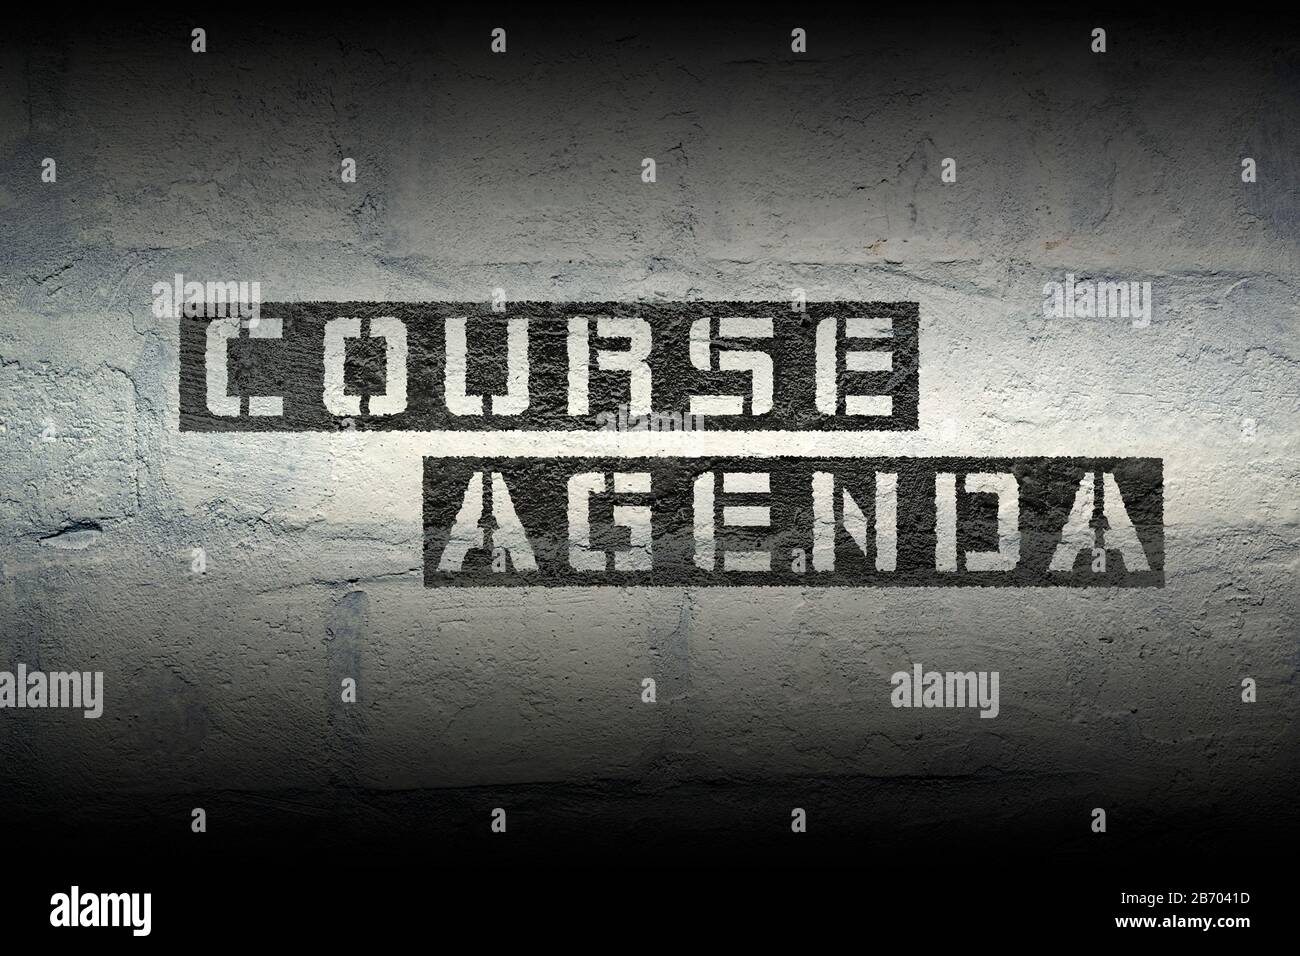 course agenda phrase stencil print on the grunge white brick wall Stock Photo